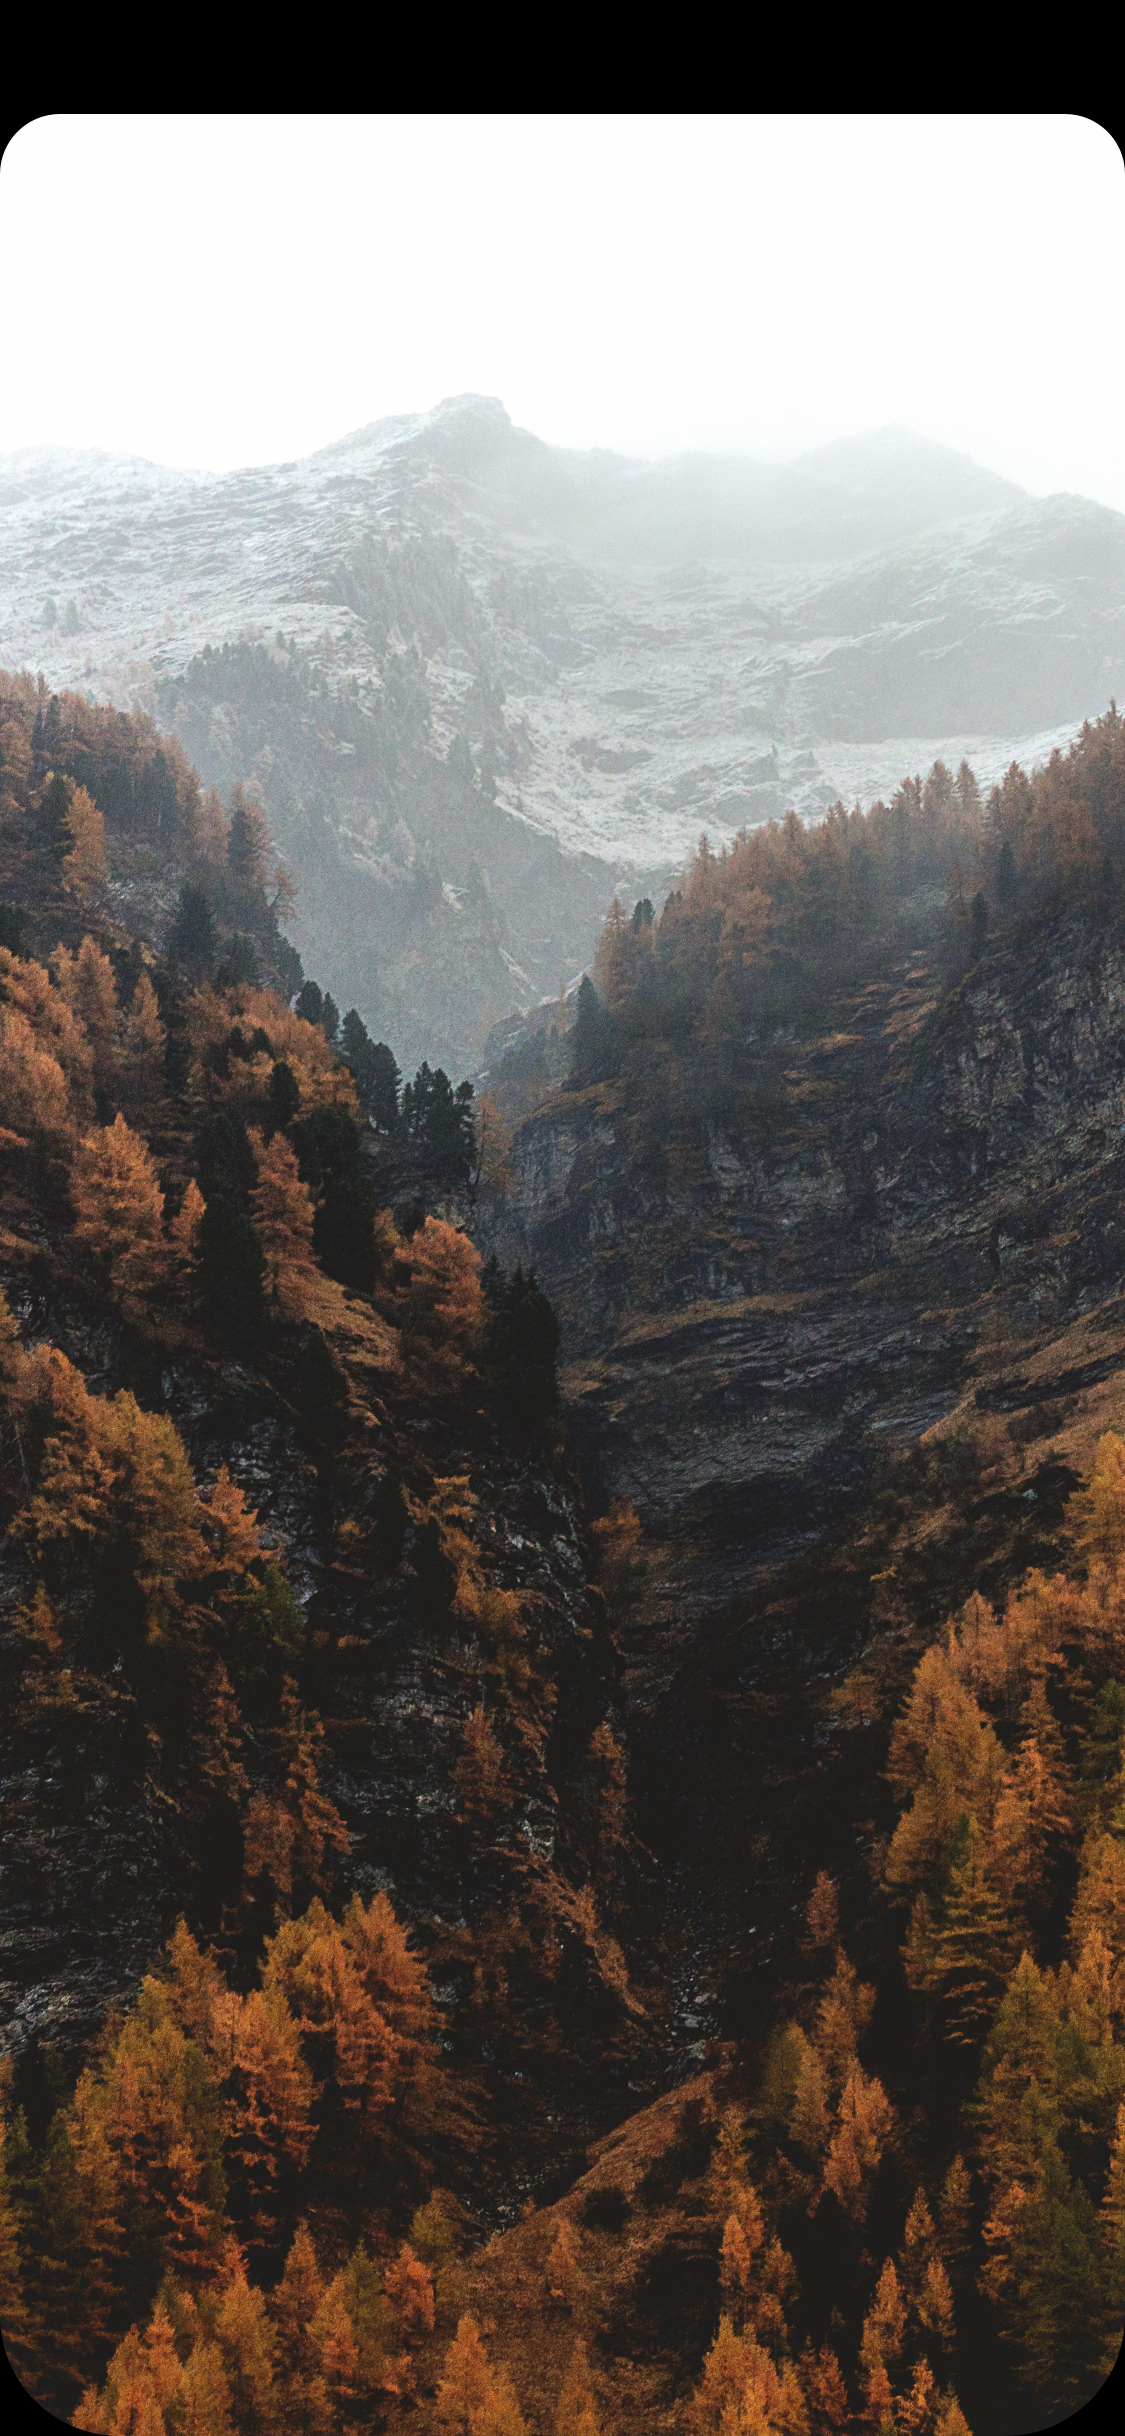 Iphone X Wallpaper Hd Mountains